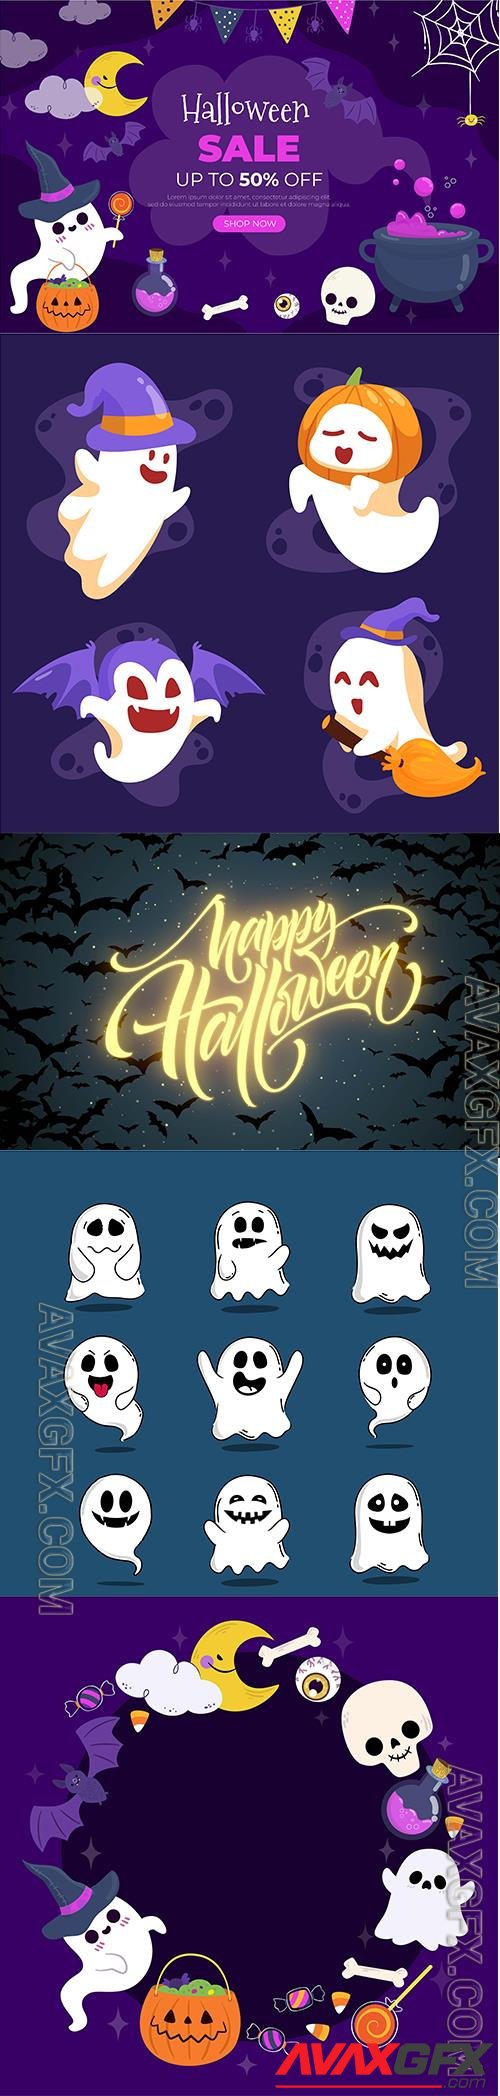 Happy halloween celebration collection vol11